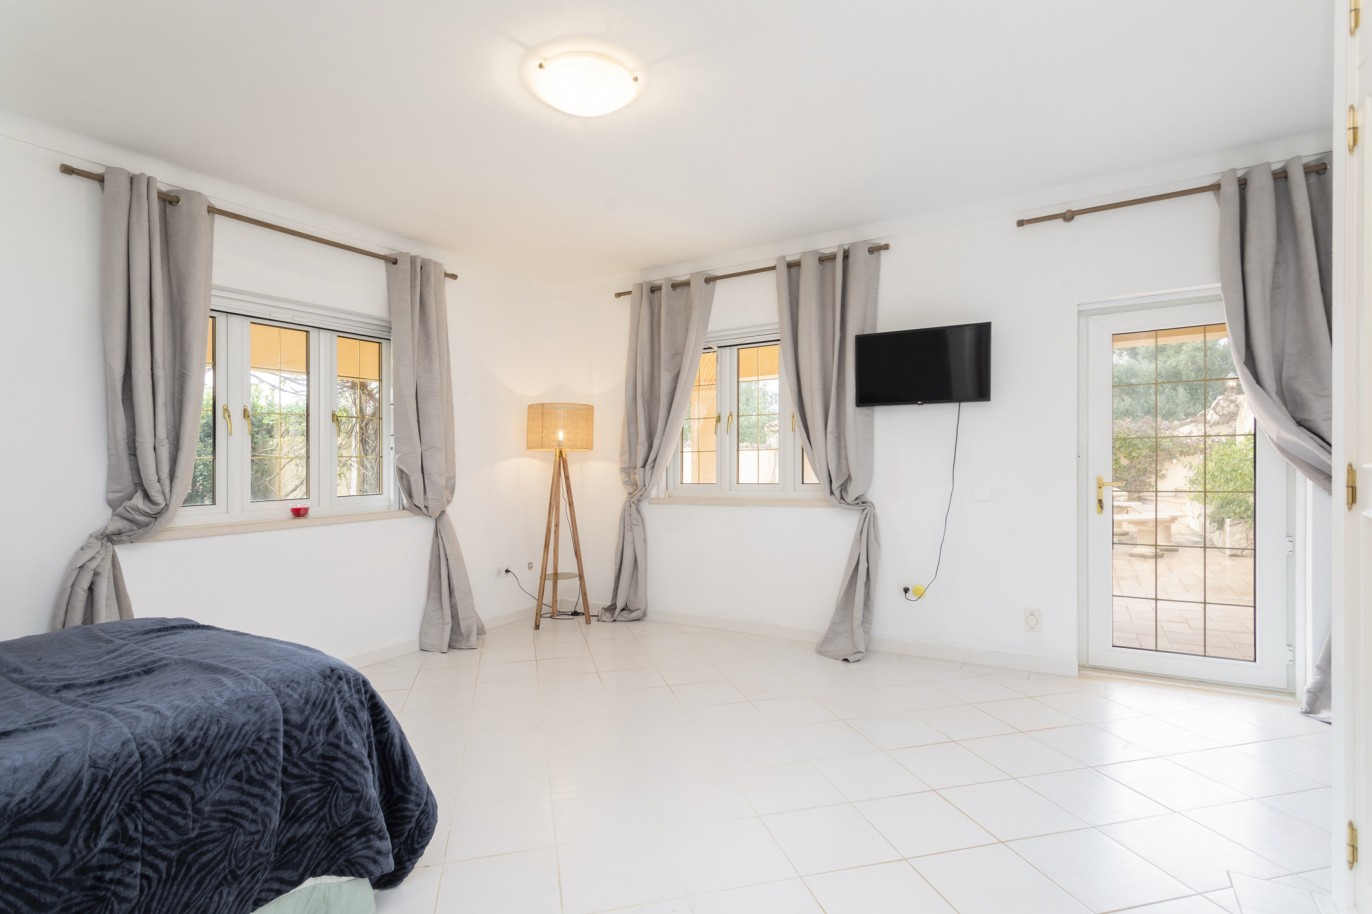 4 Bedroom Villa with swimming pool for sale in Loulé, Algarve_214813